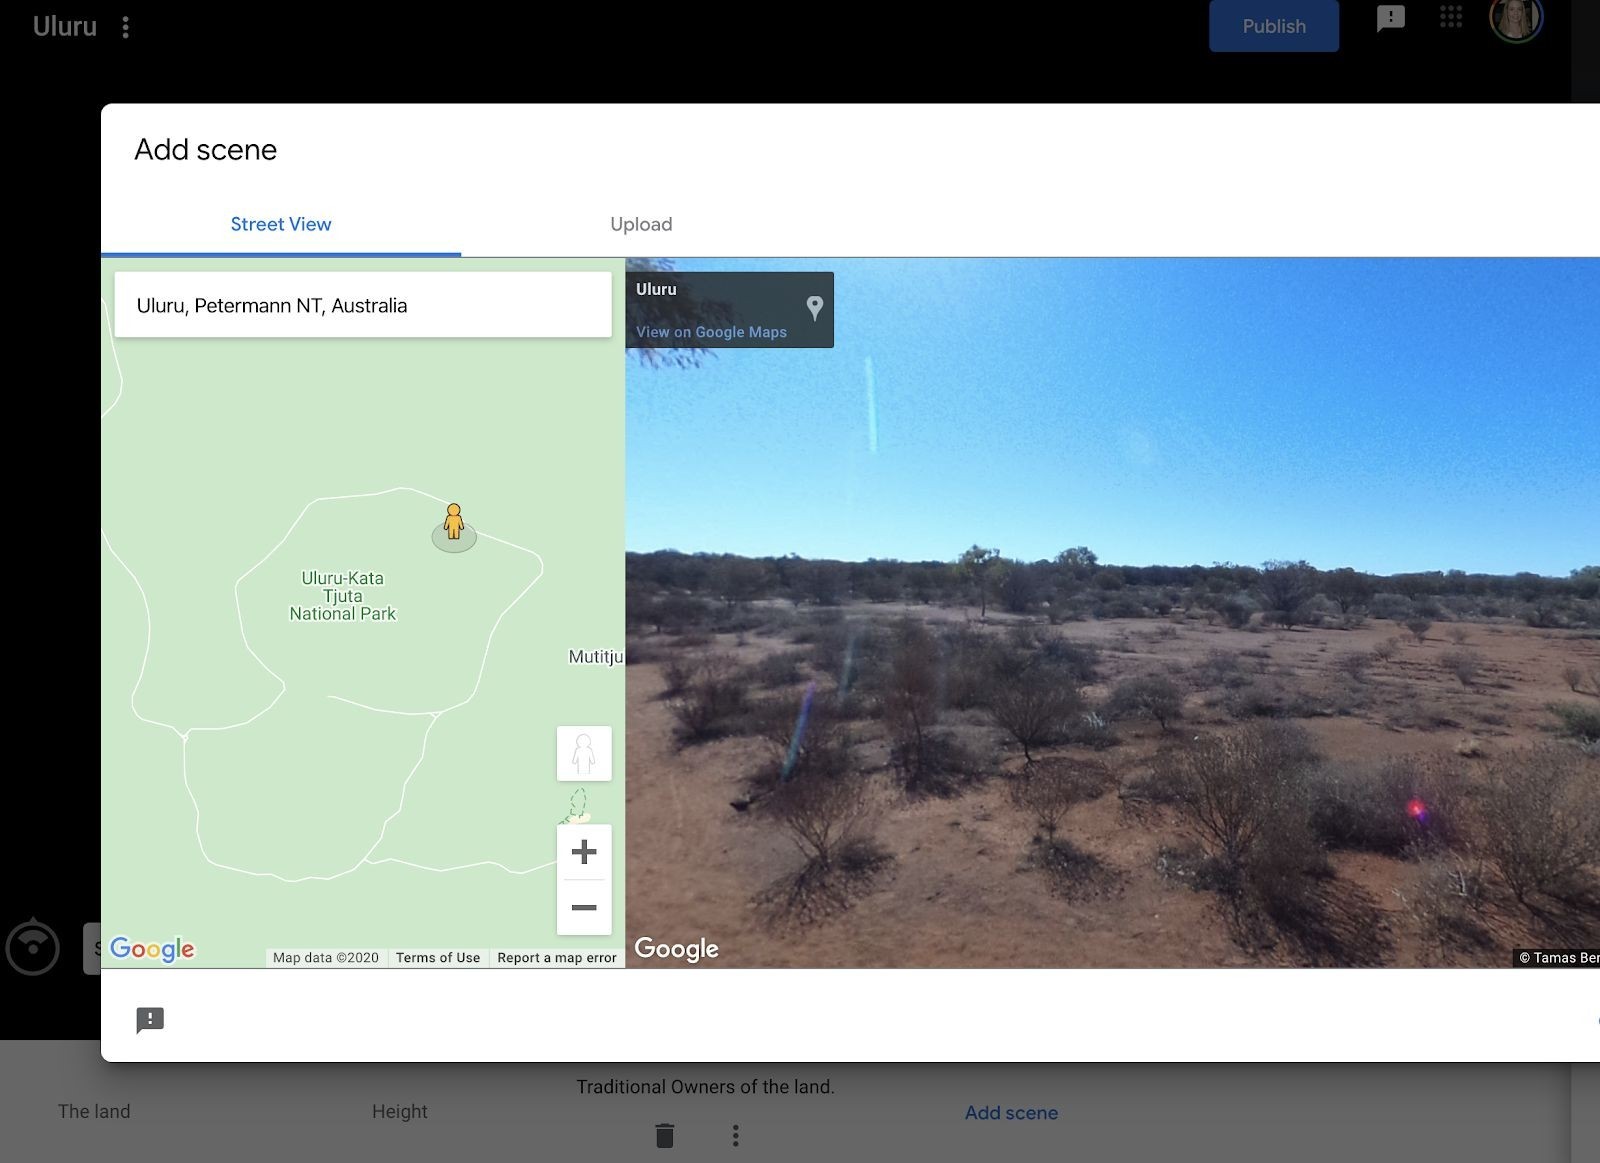 Screen capture of a street view map of Uluru